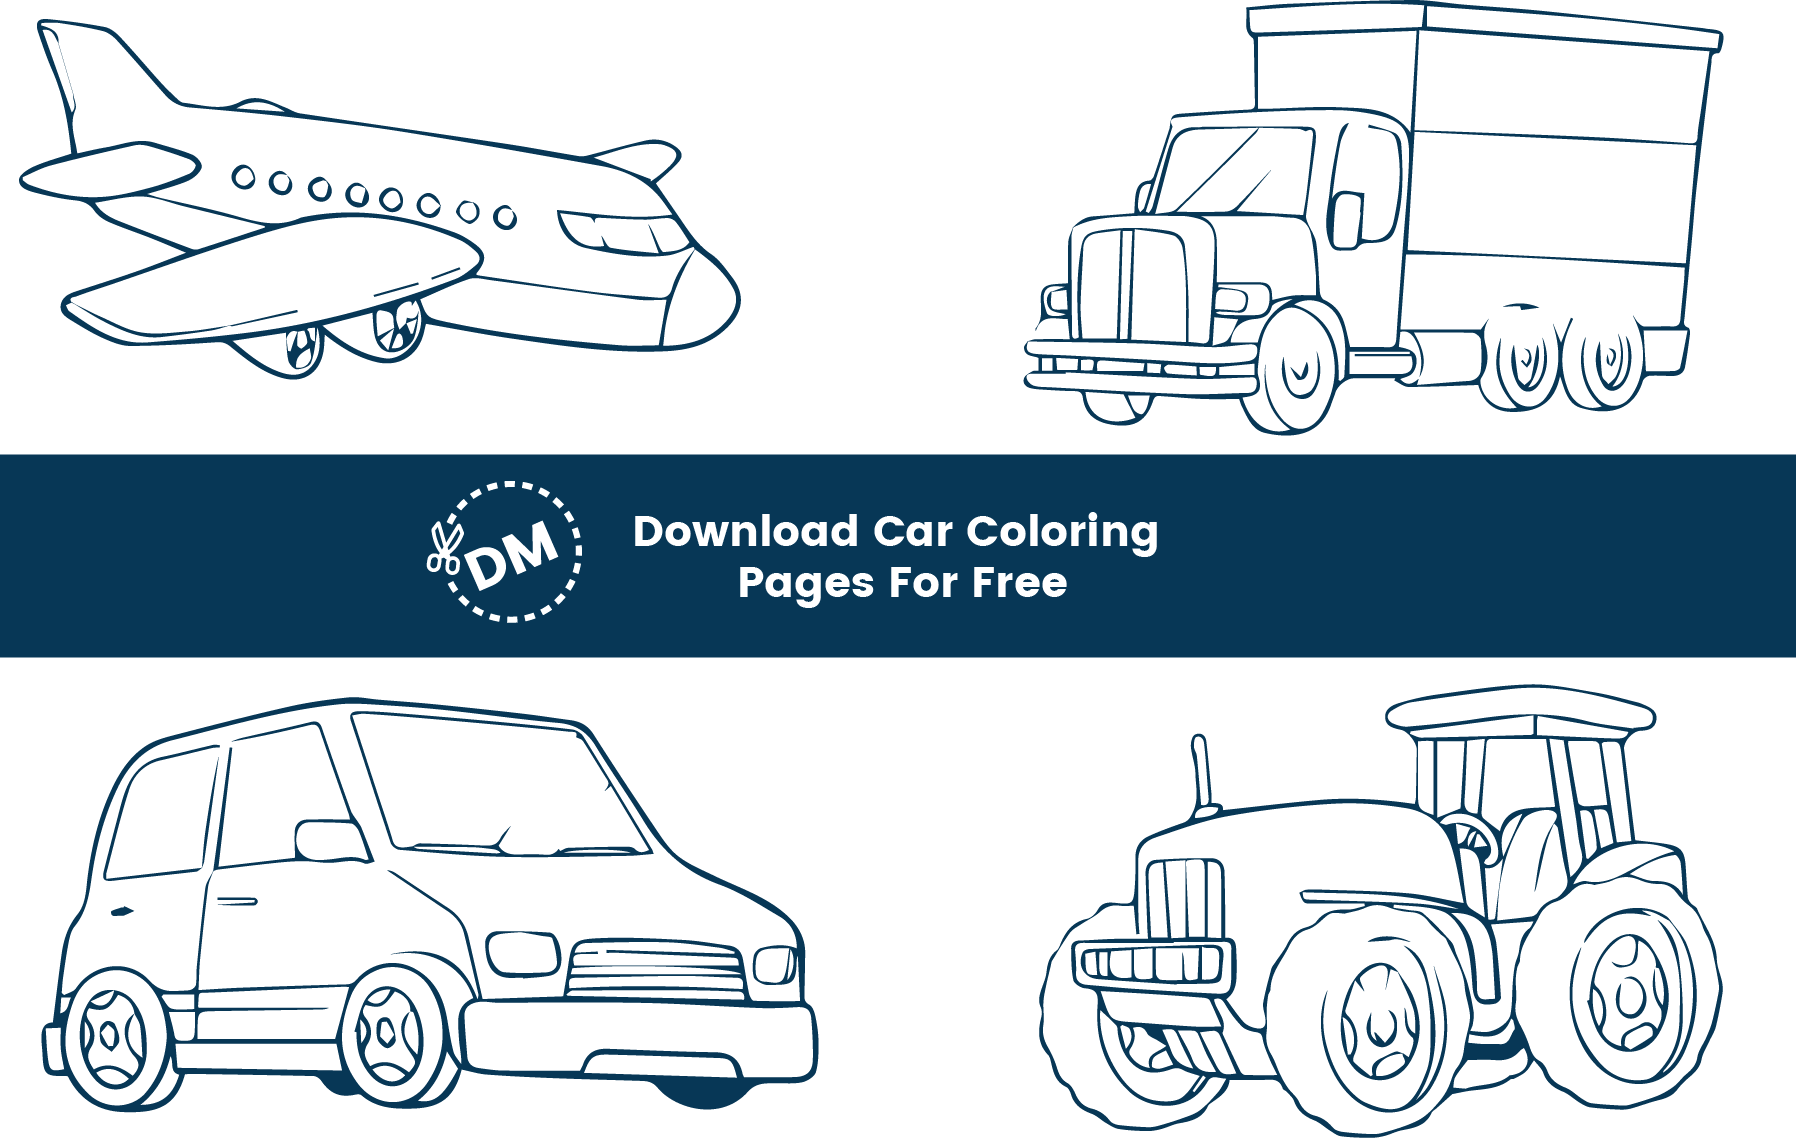 Free Printable Car Coloring Pages Download - diy-magazine.com